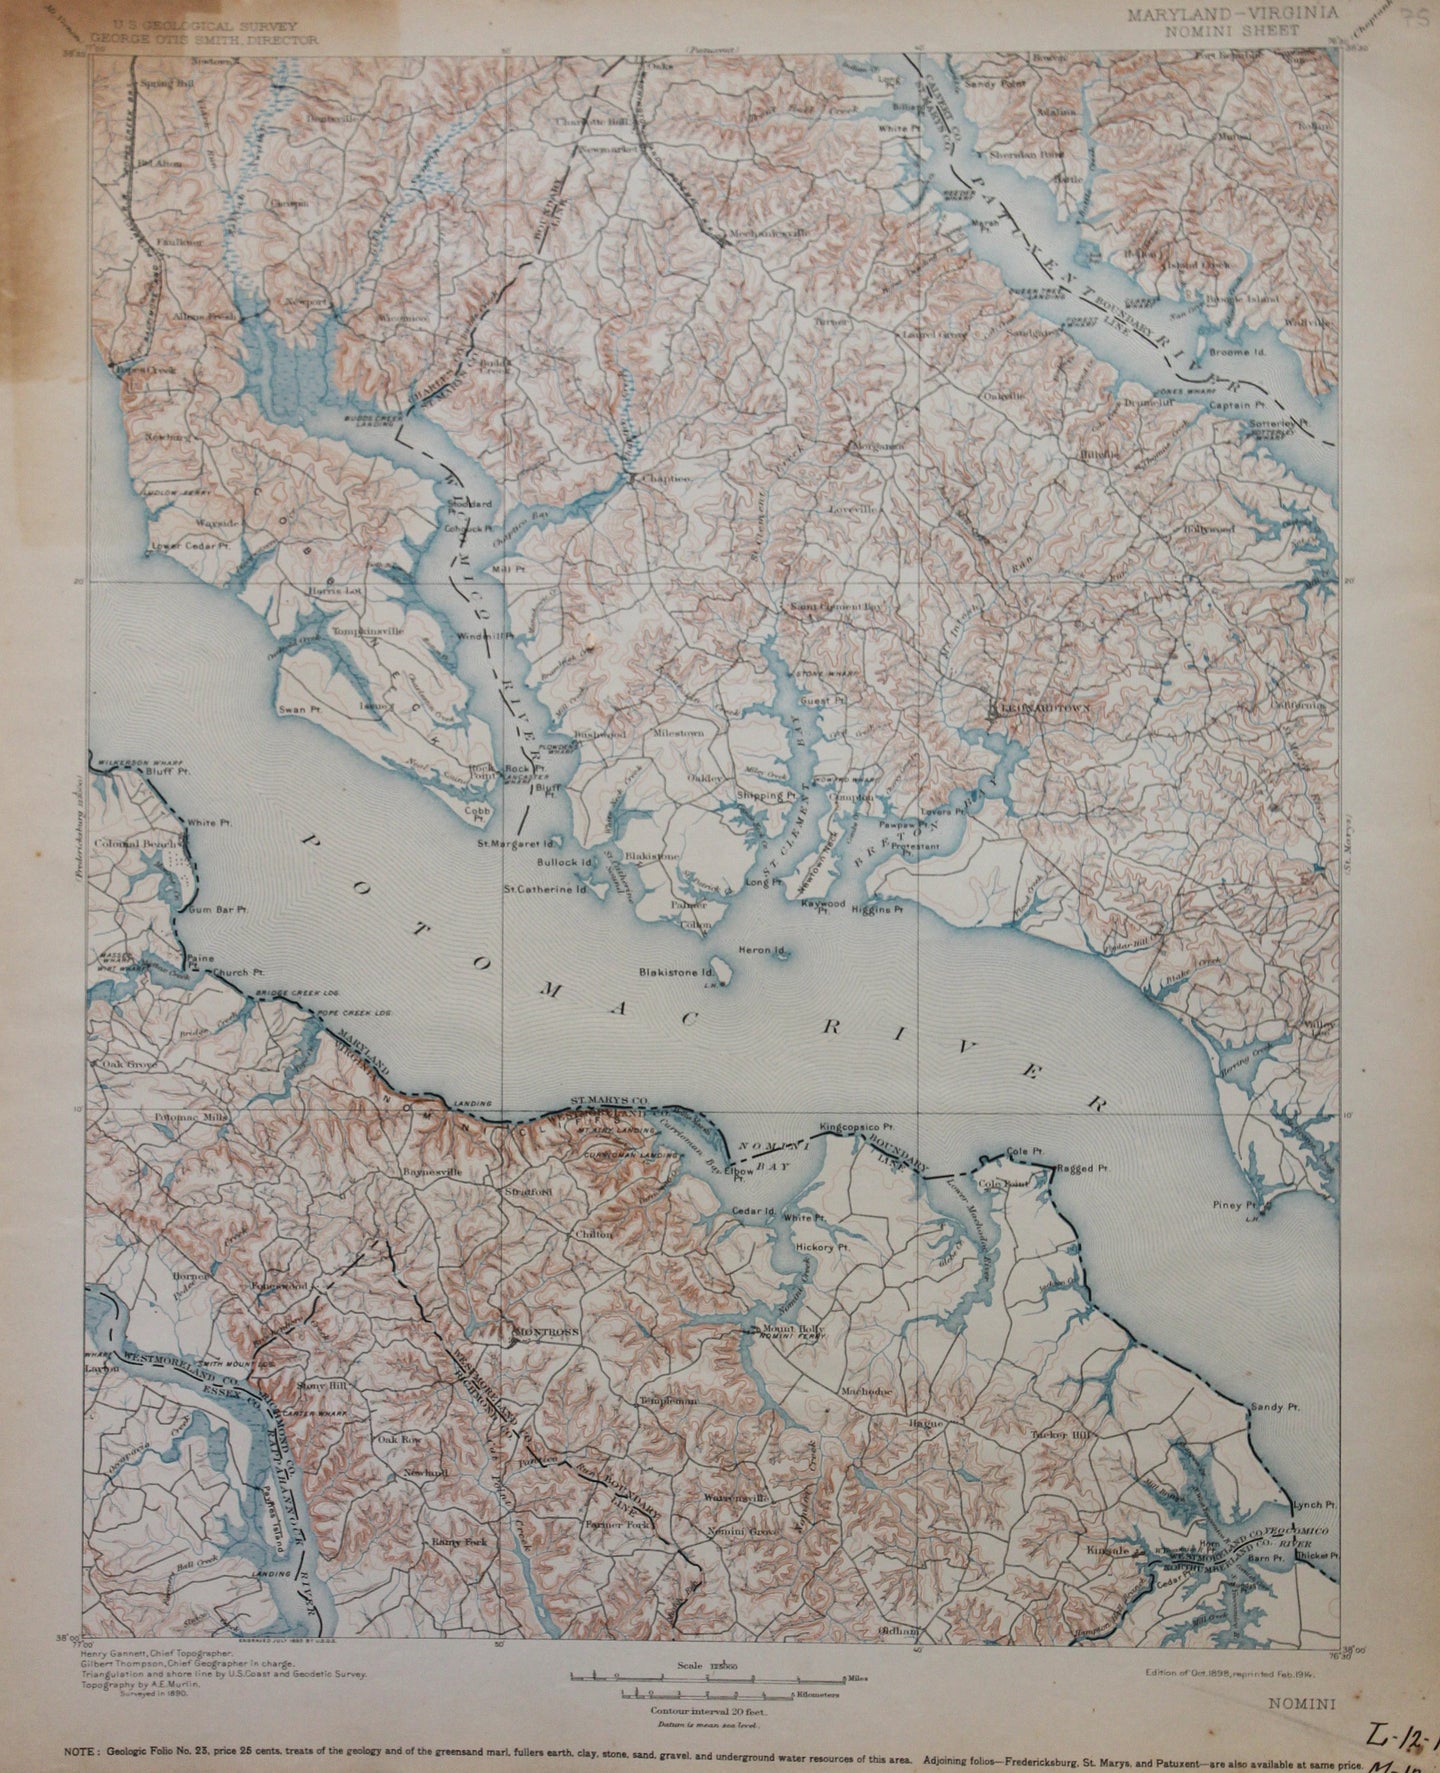 Genuine-Antique-Map-Nomini-Maryland-Virginia--1914-U-S-Geological-Survey--Maps-Of-Antiquity